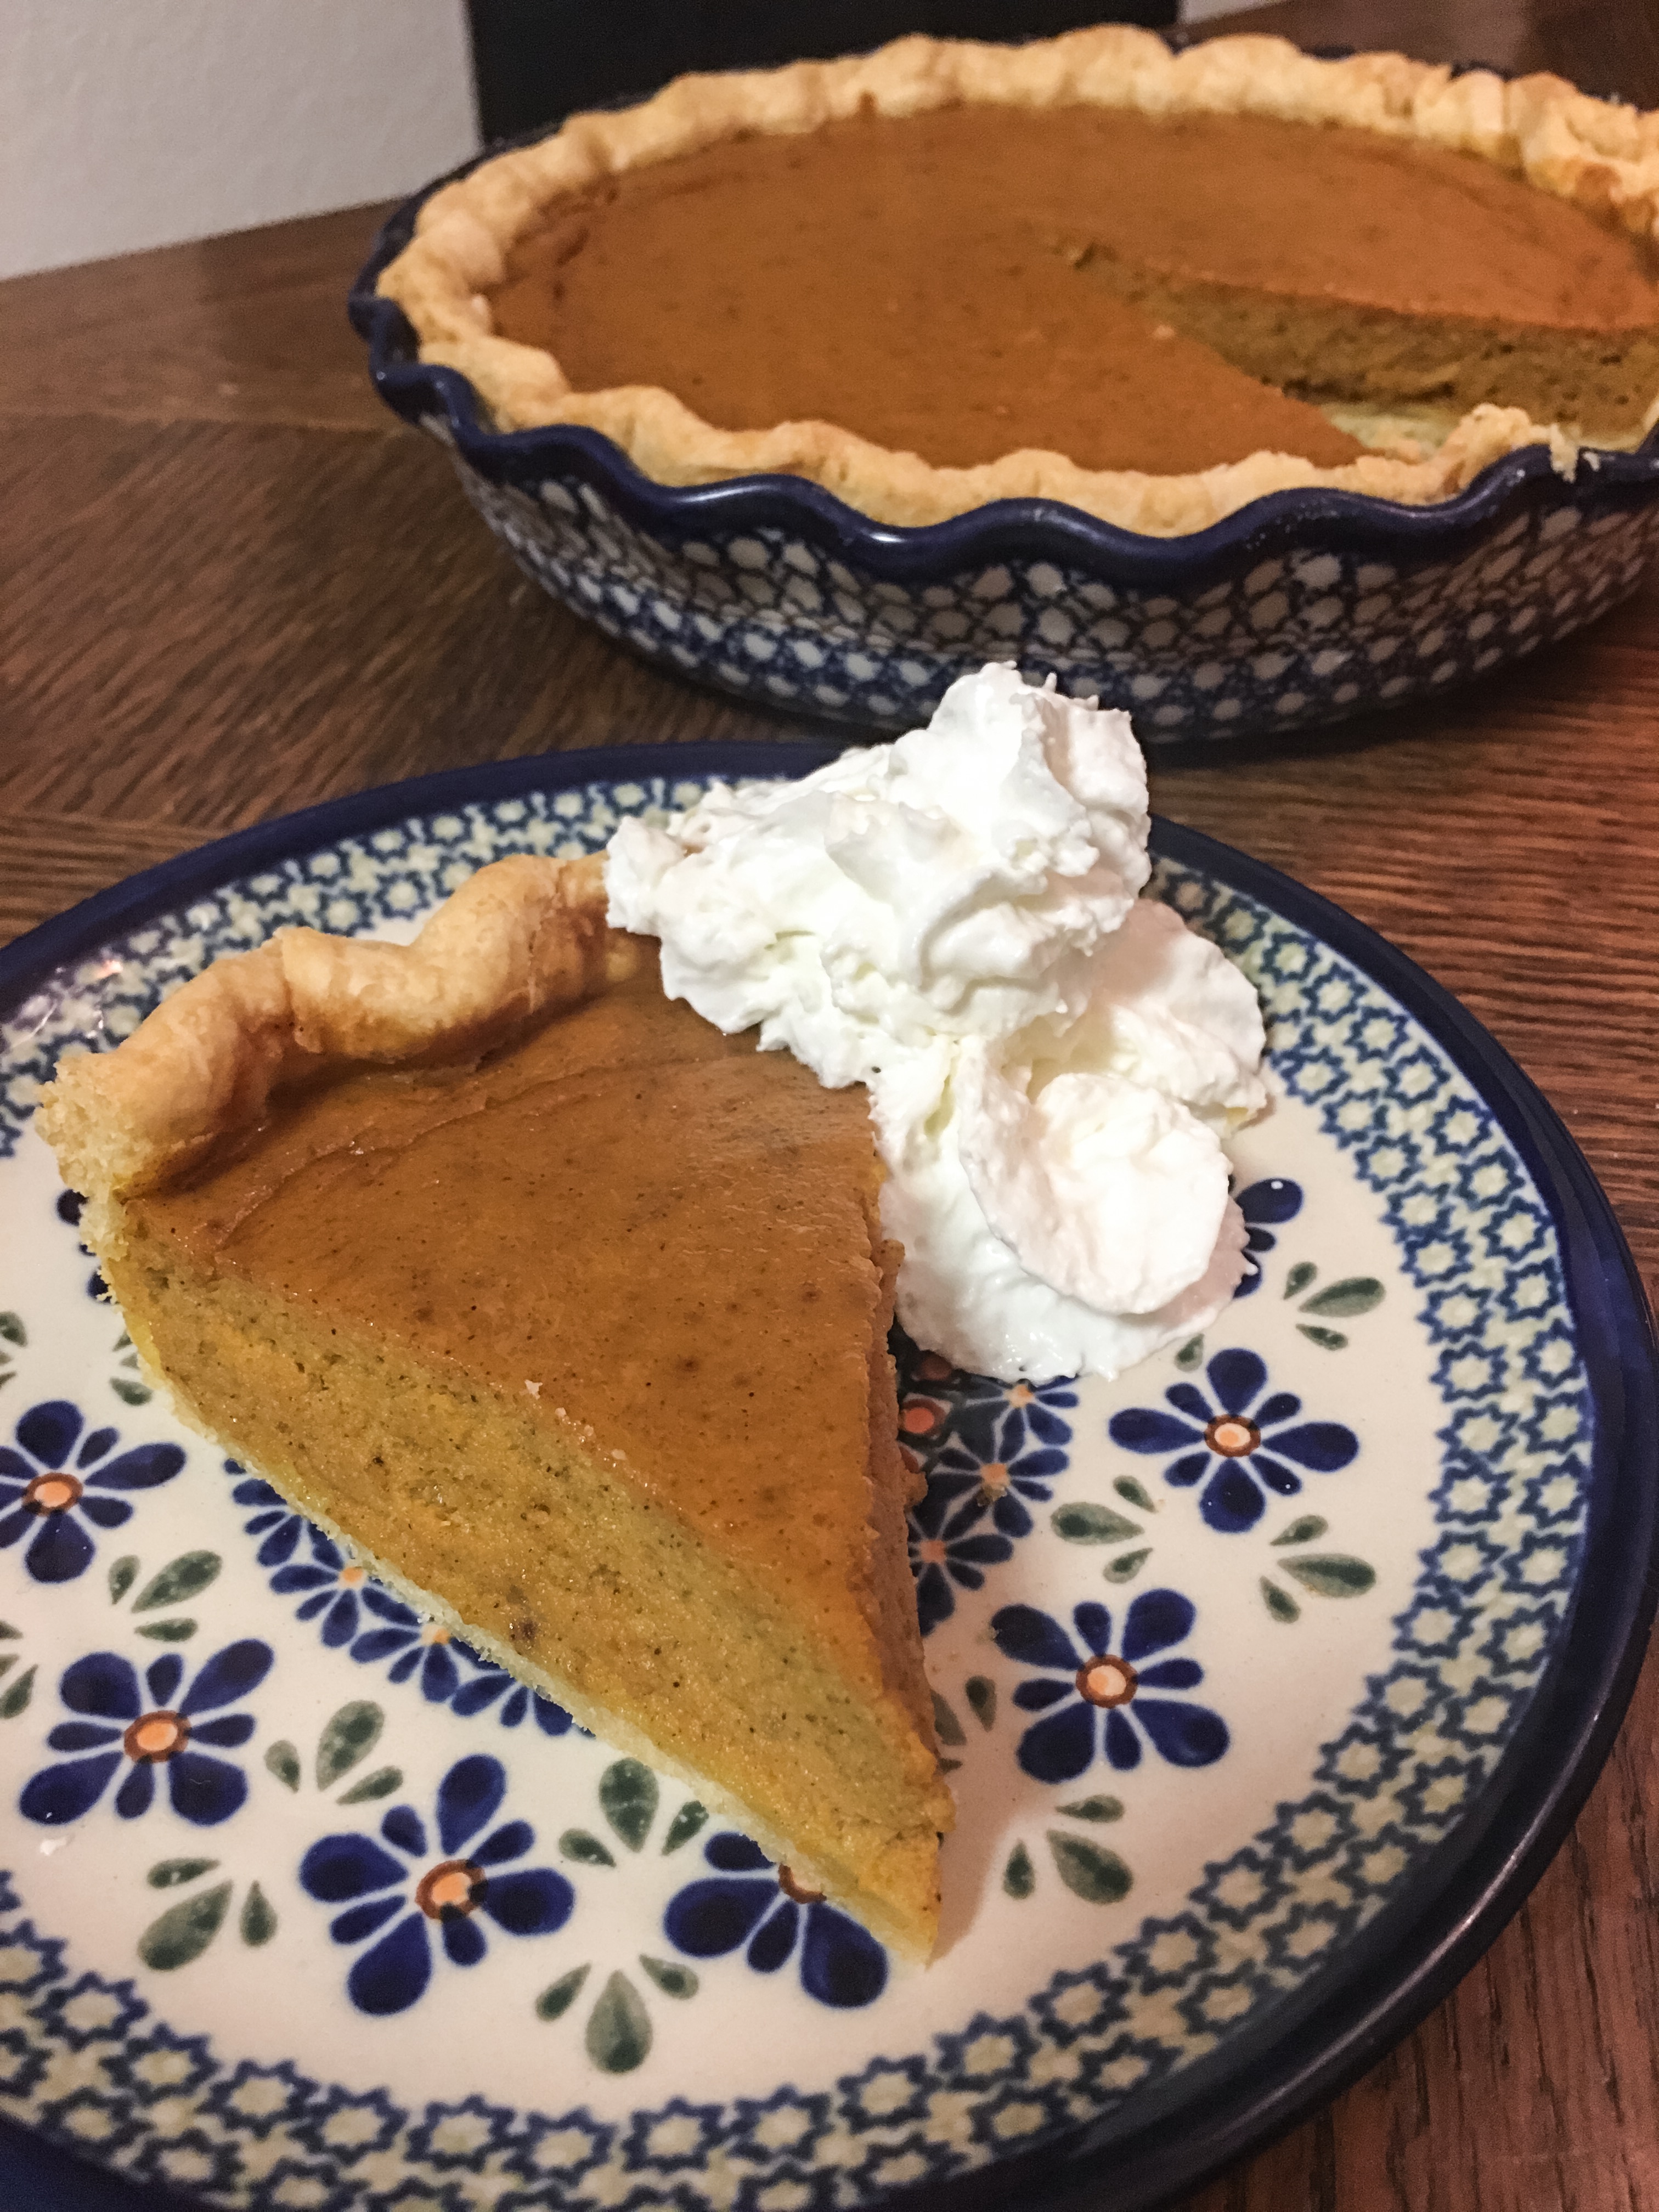 Marie Callender's Pumpkin Pie Recipe, my family's favorite!